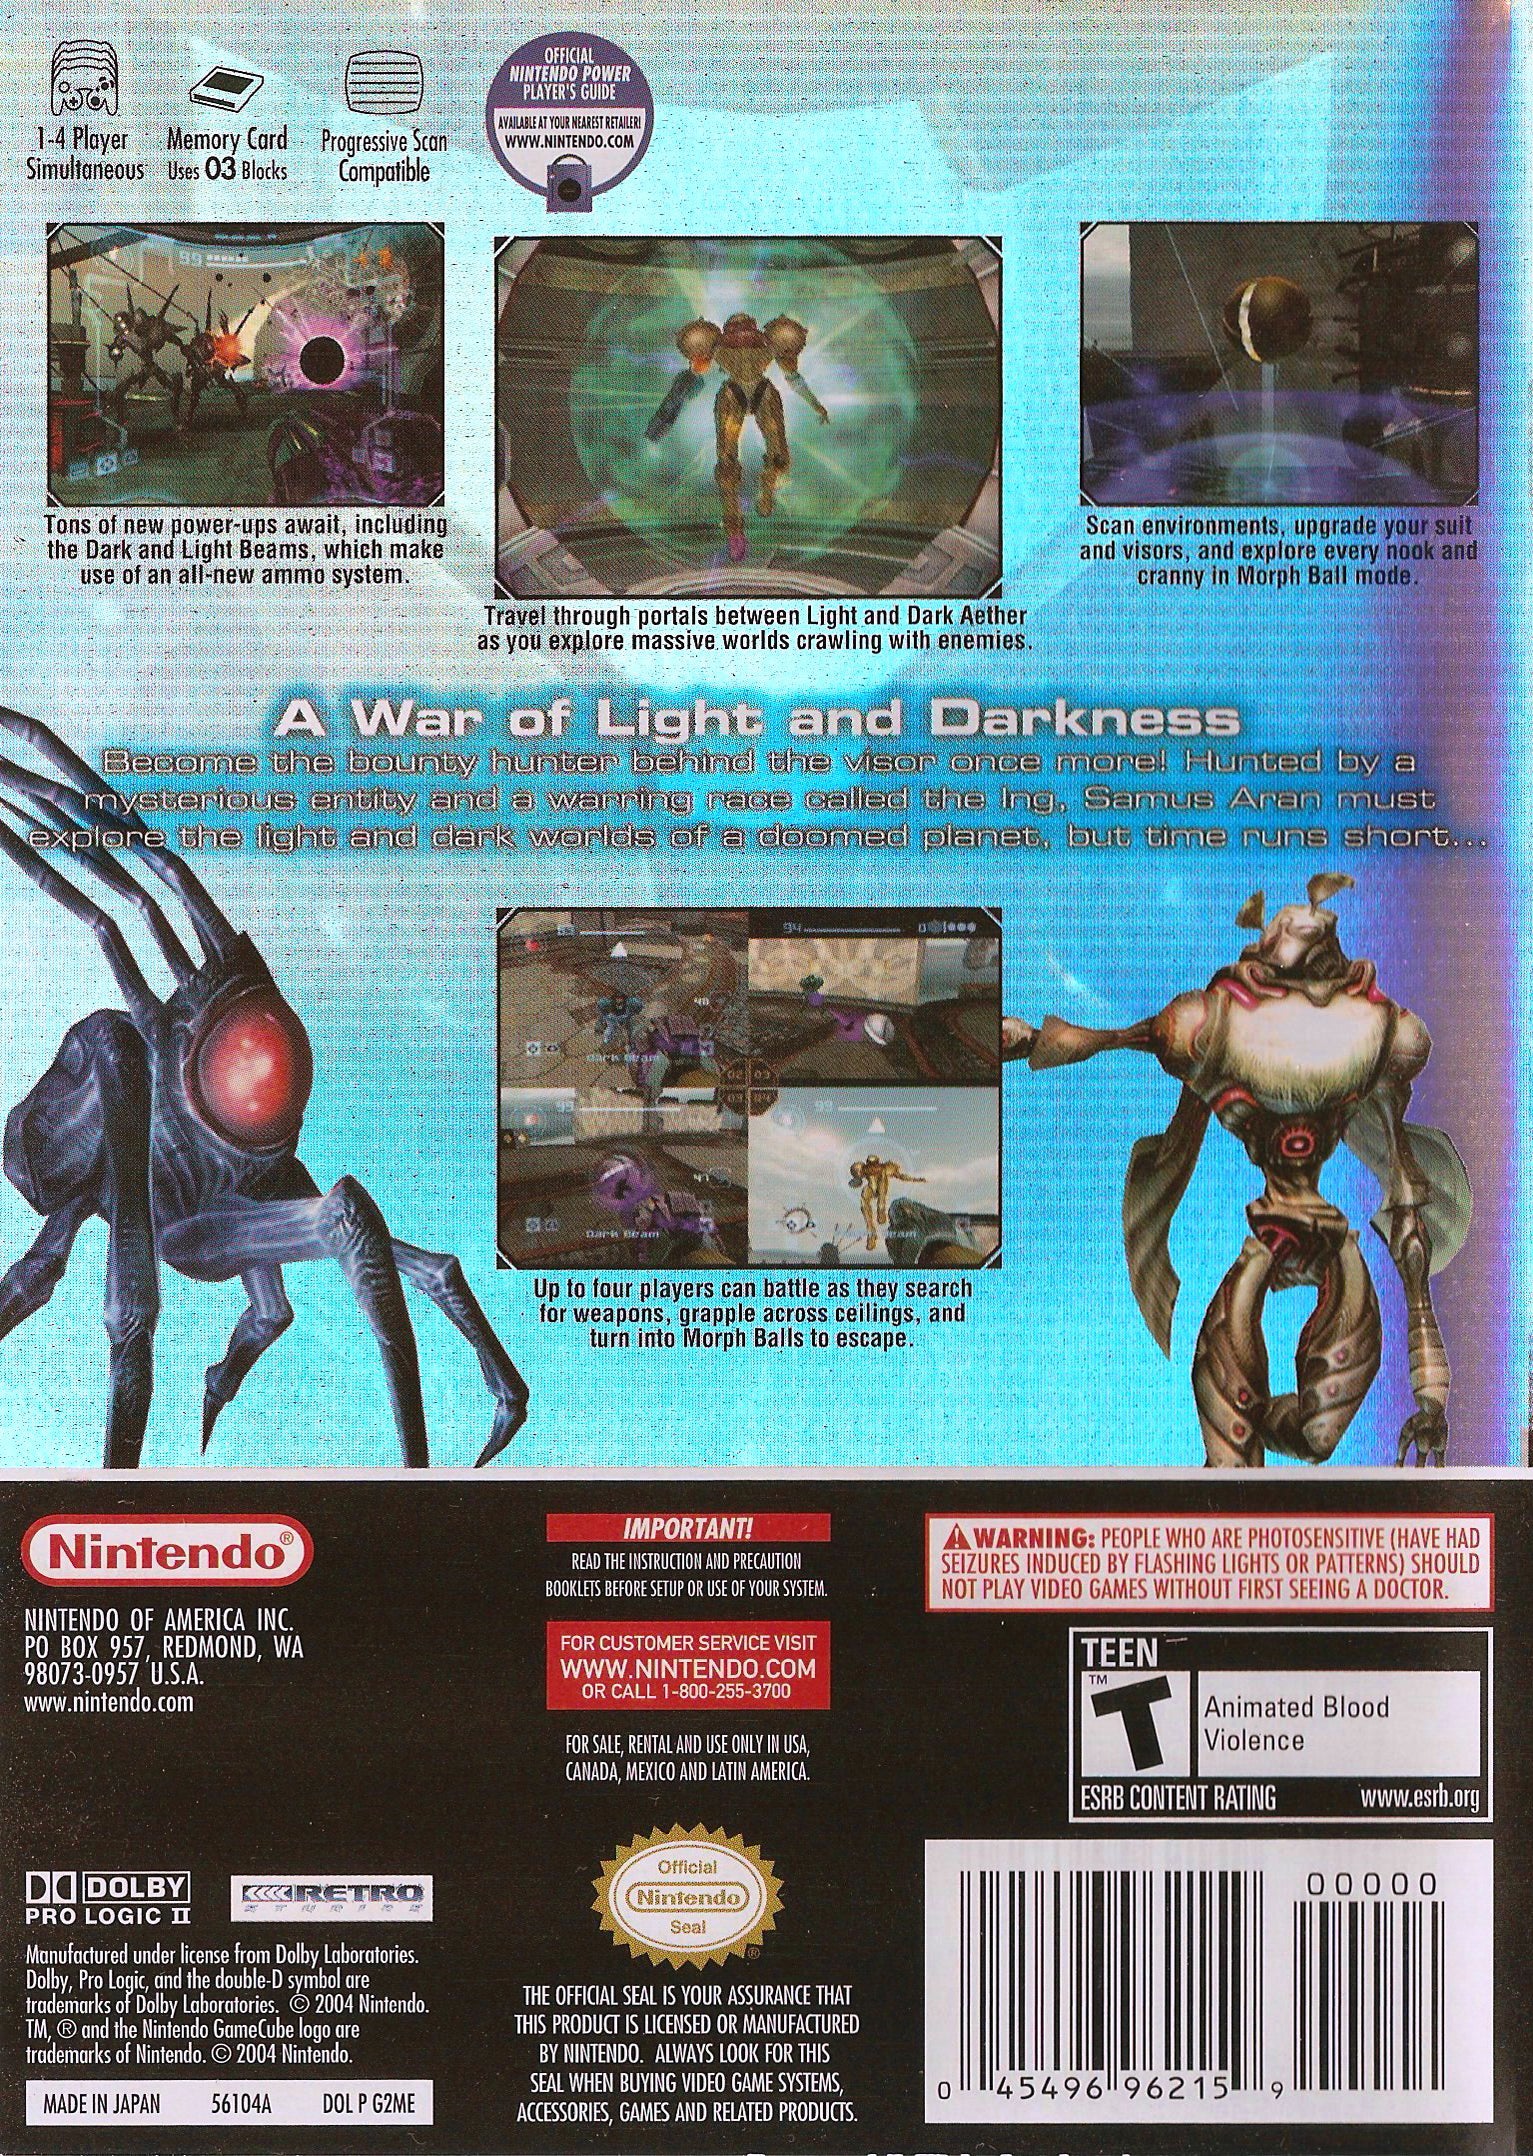 Metroid Prime 2: Echoes - (GC) GameCube Video Games Nintendo   